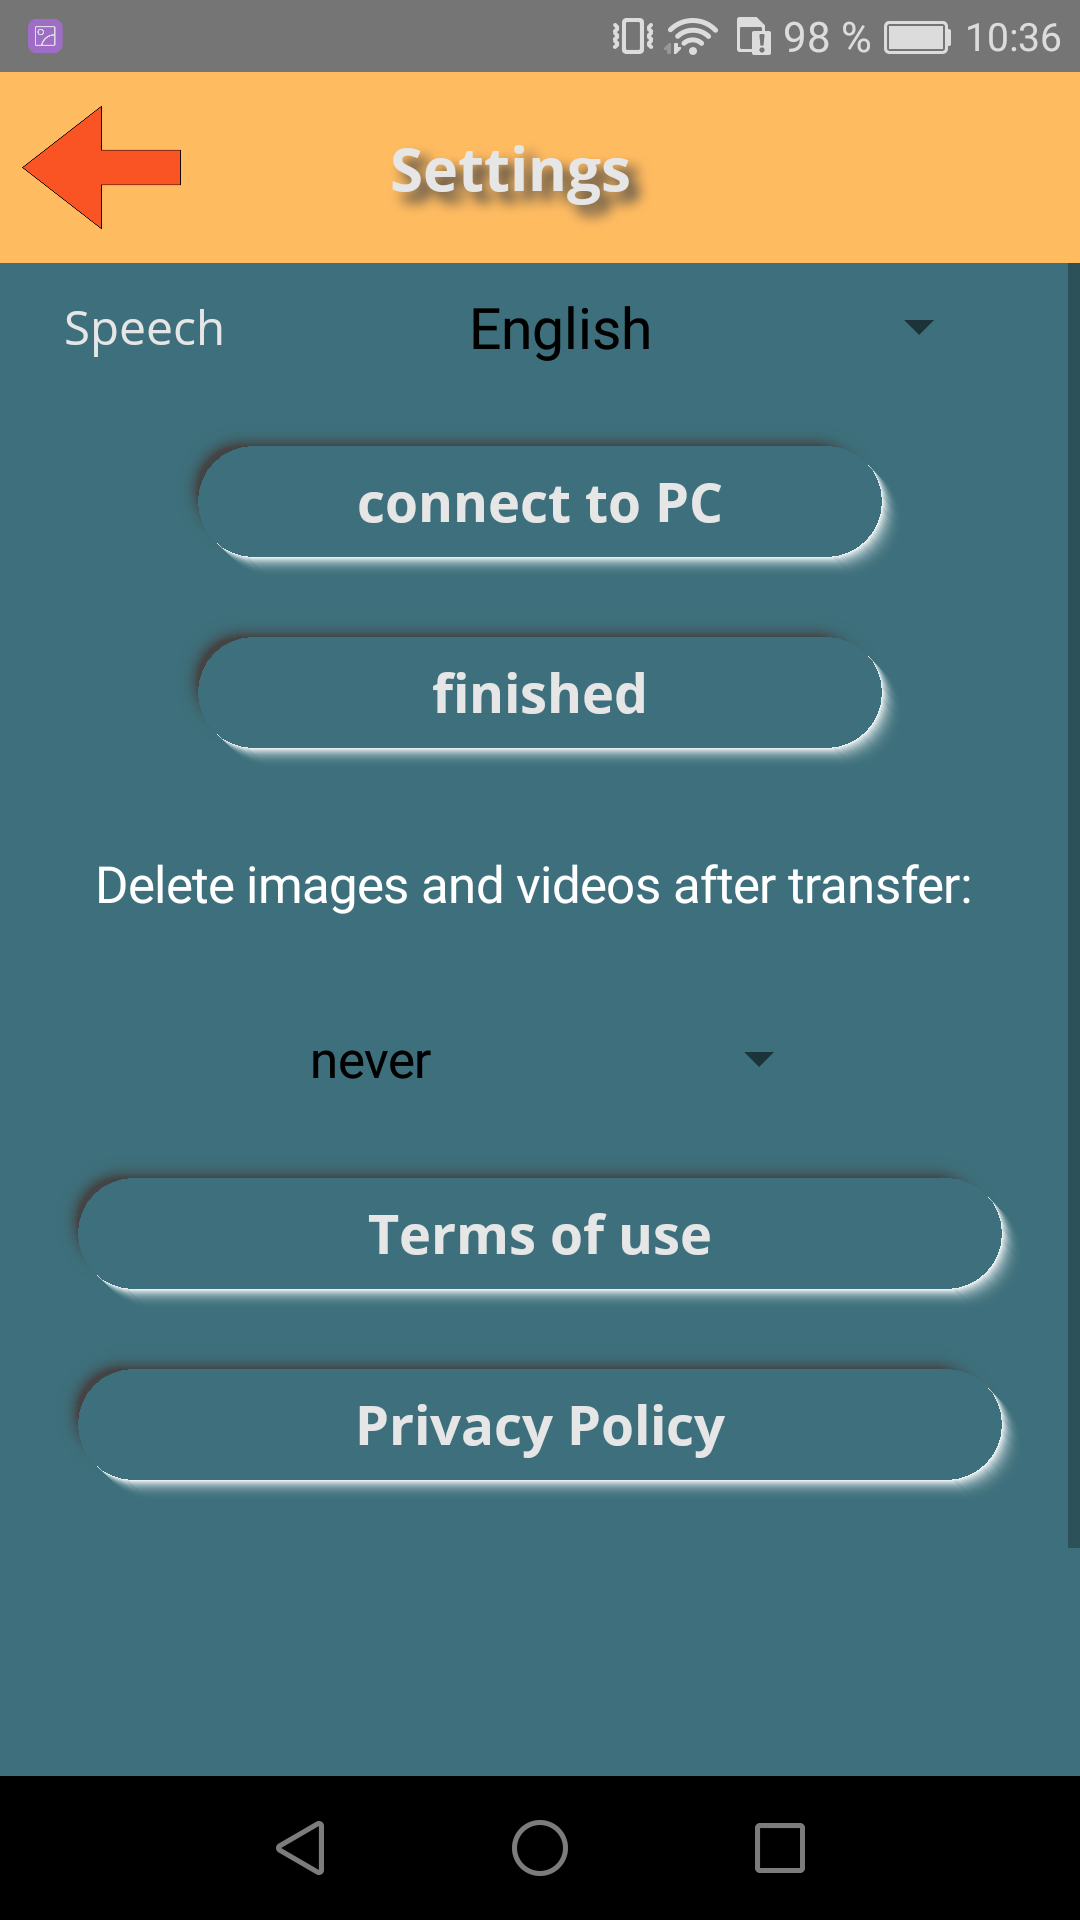 myoop screenshot settings